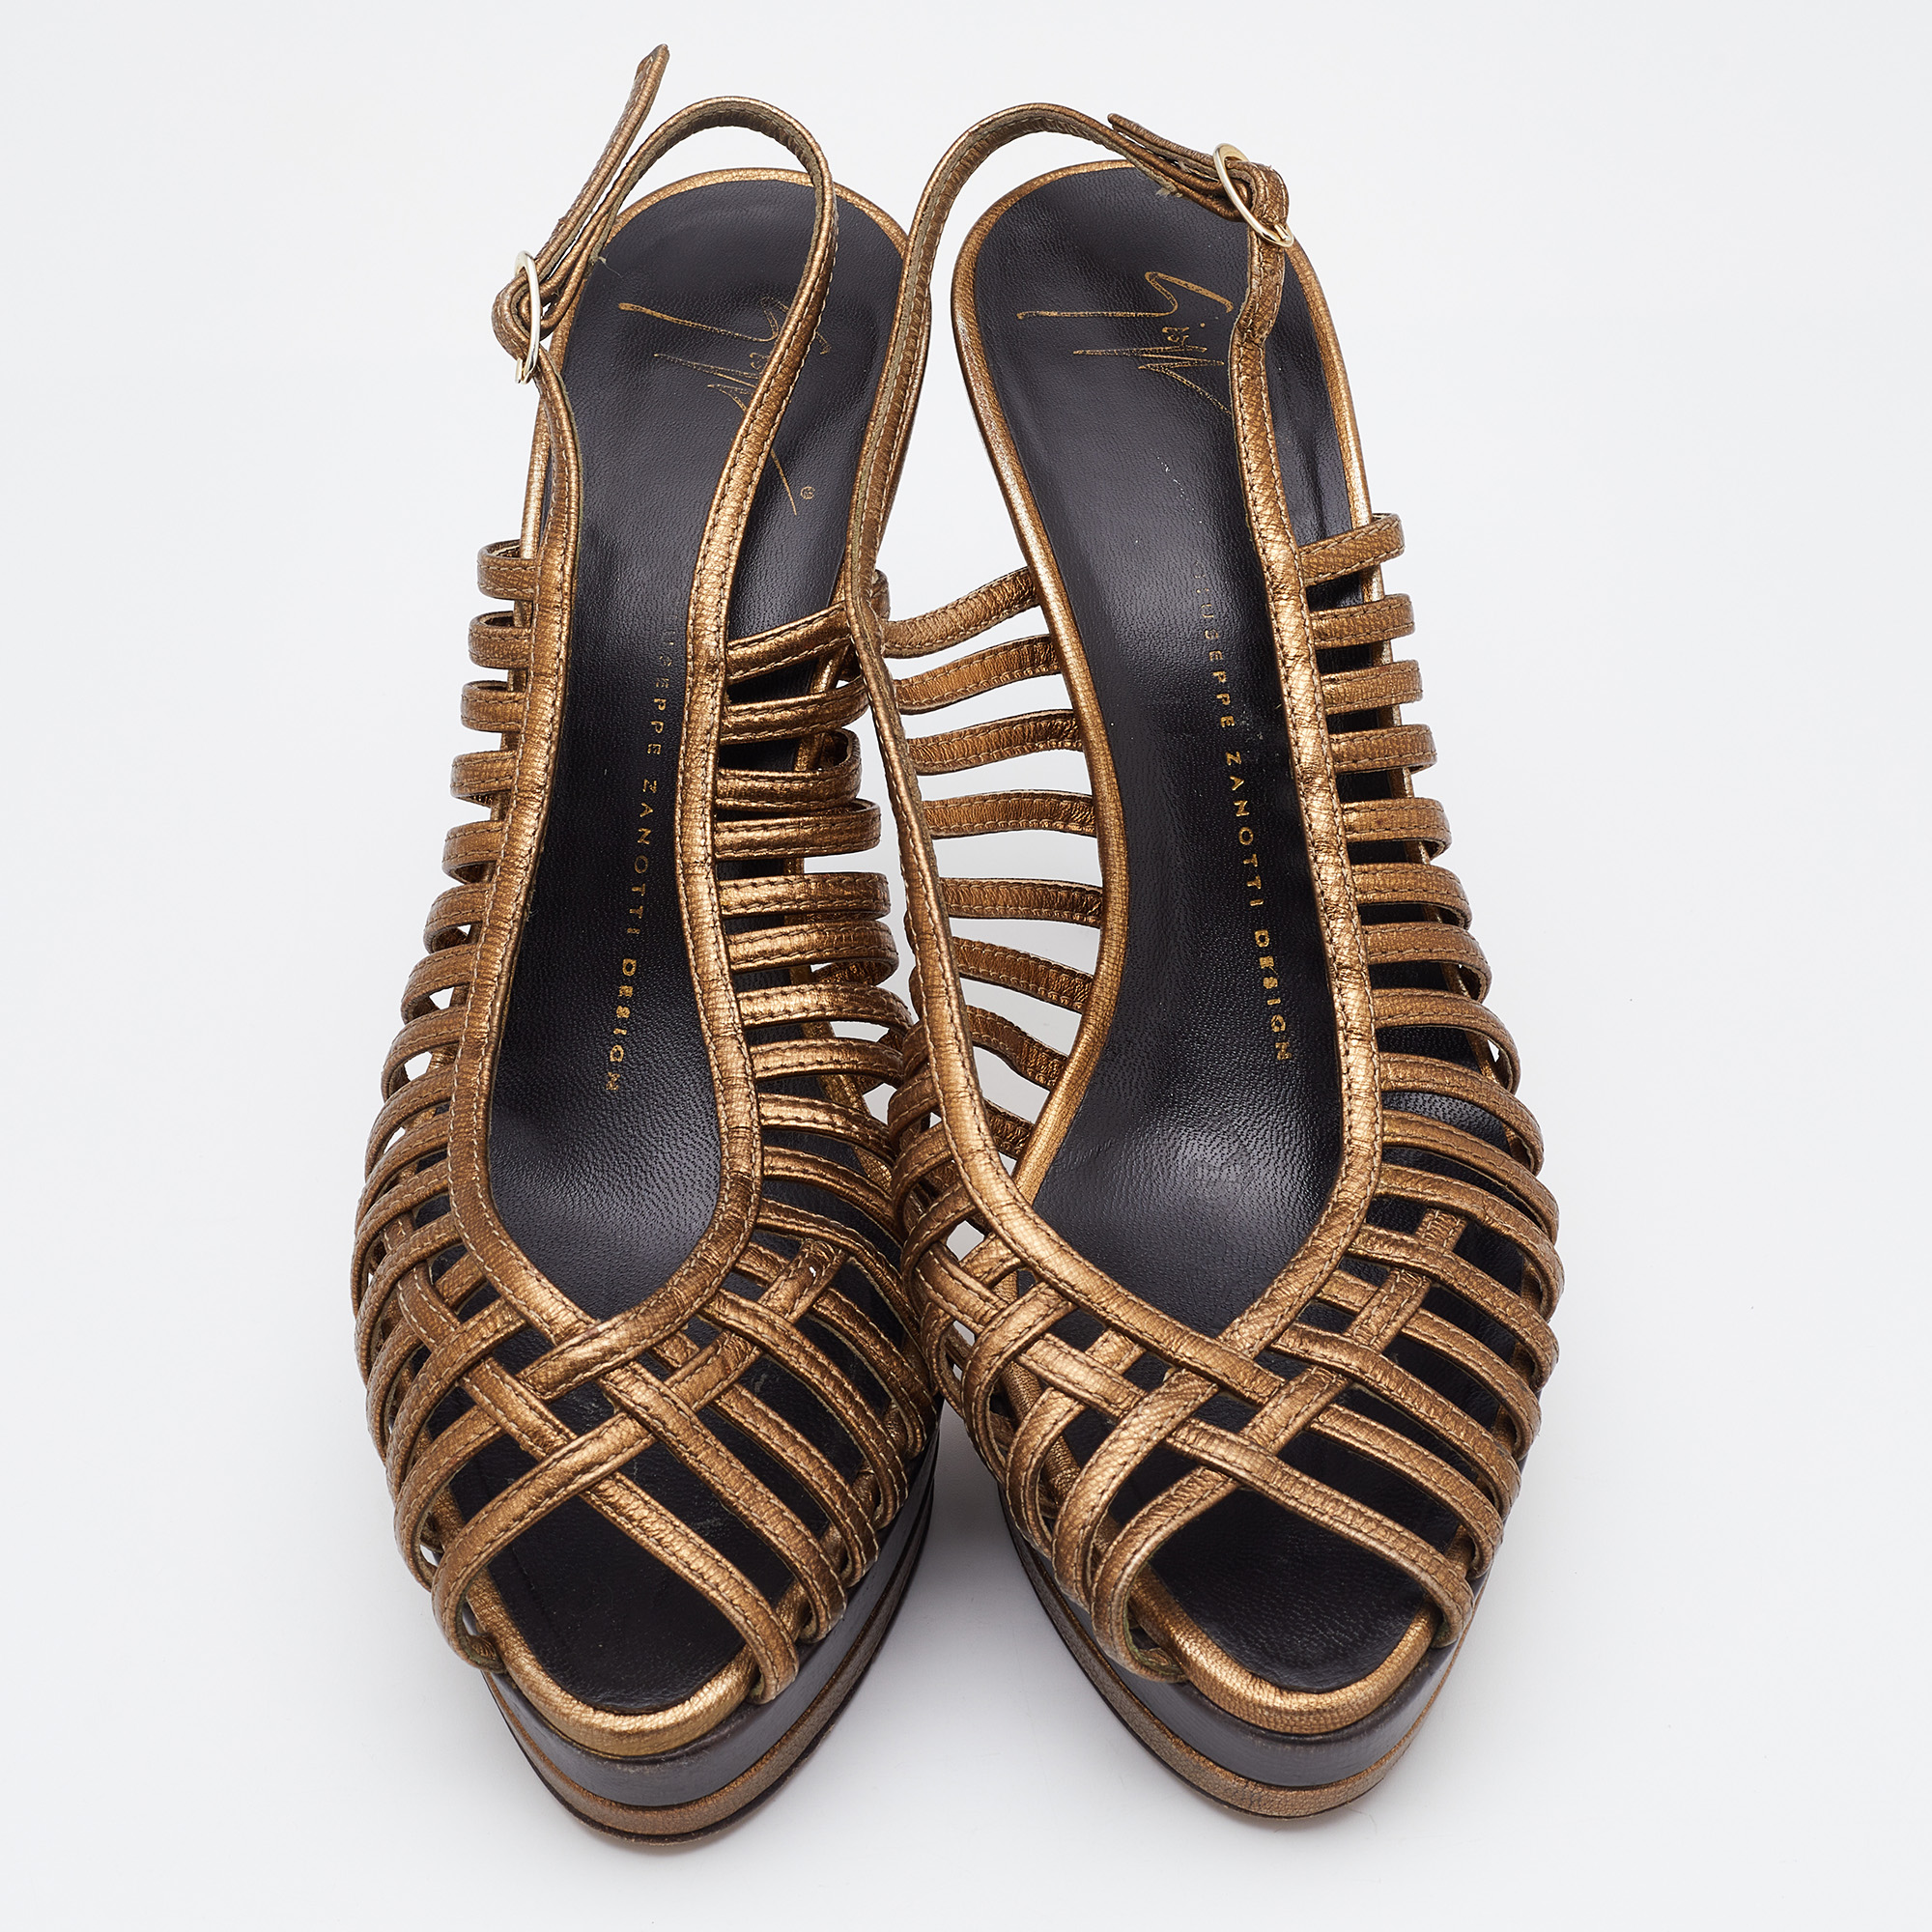 Giuseppe Zanotti Gold/Brown Leather Strappy Platform Sandals Size 39